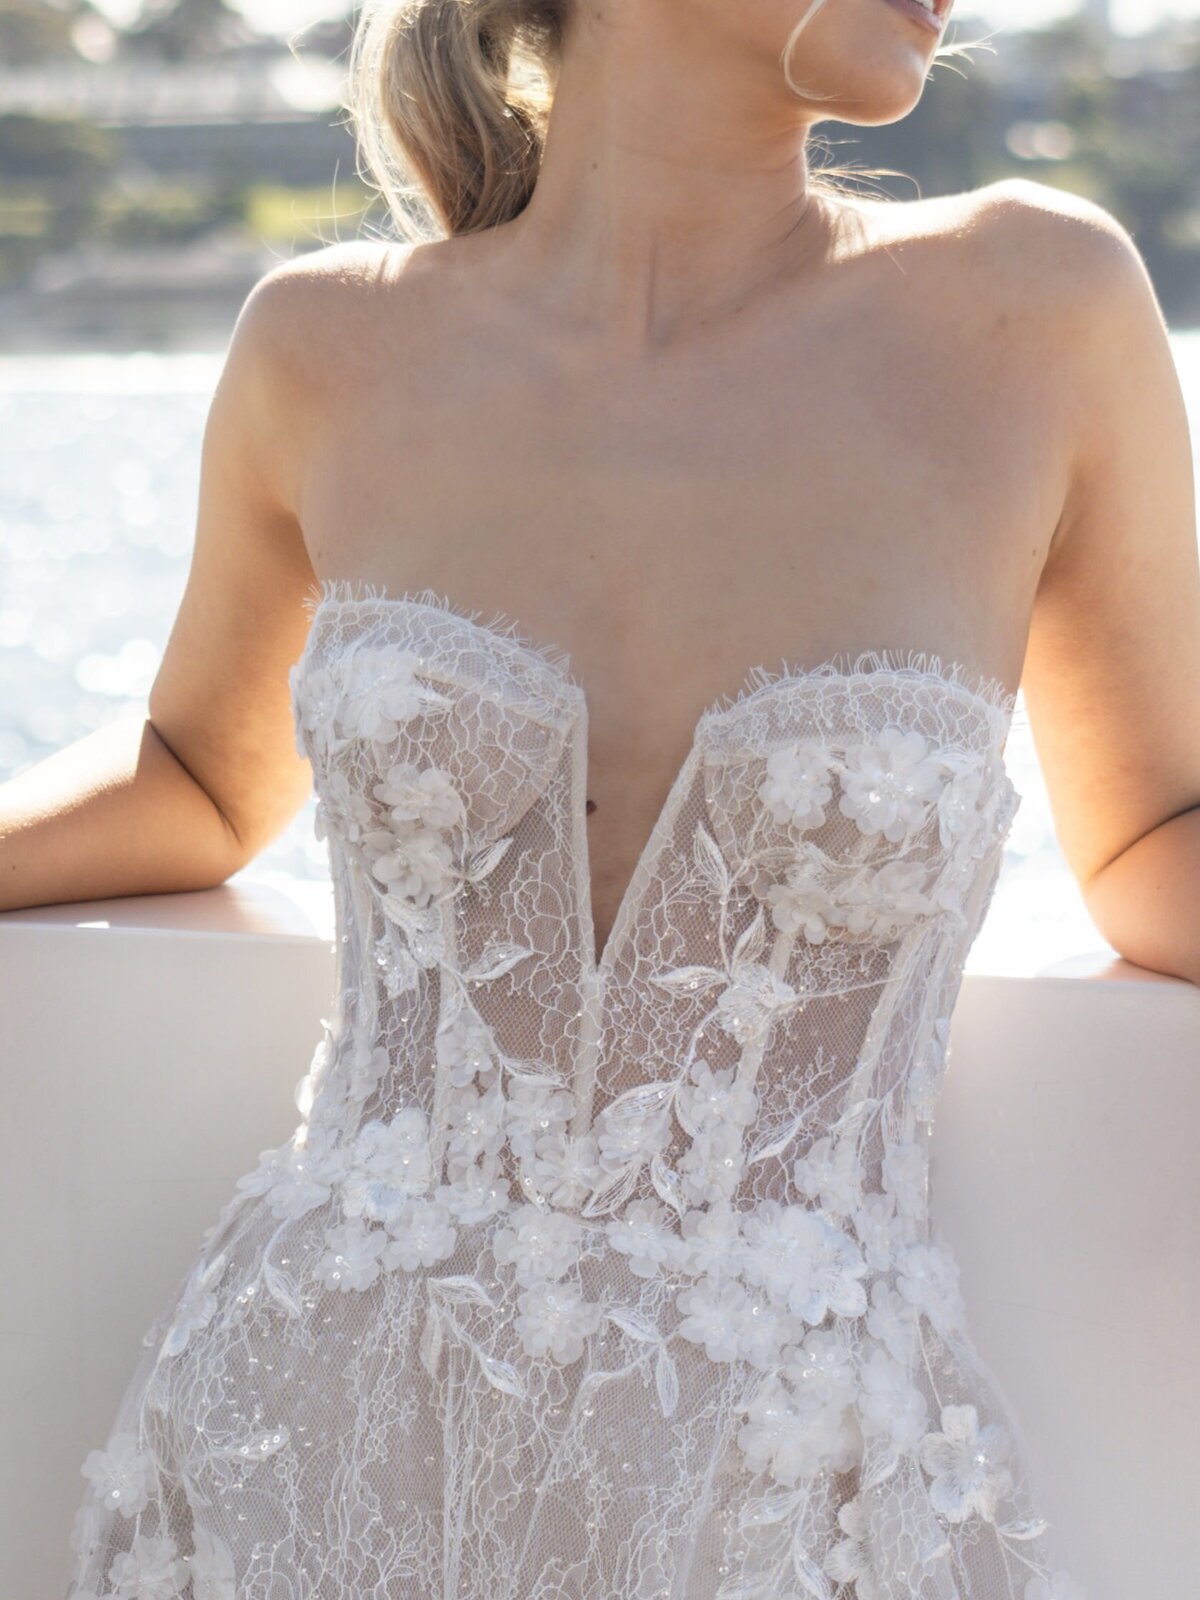 Muse by Berta wedding dress - Serenity Photography - 90